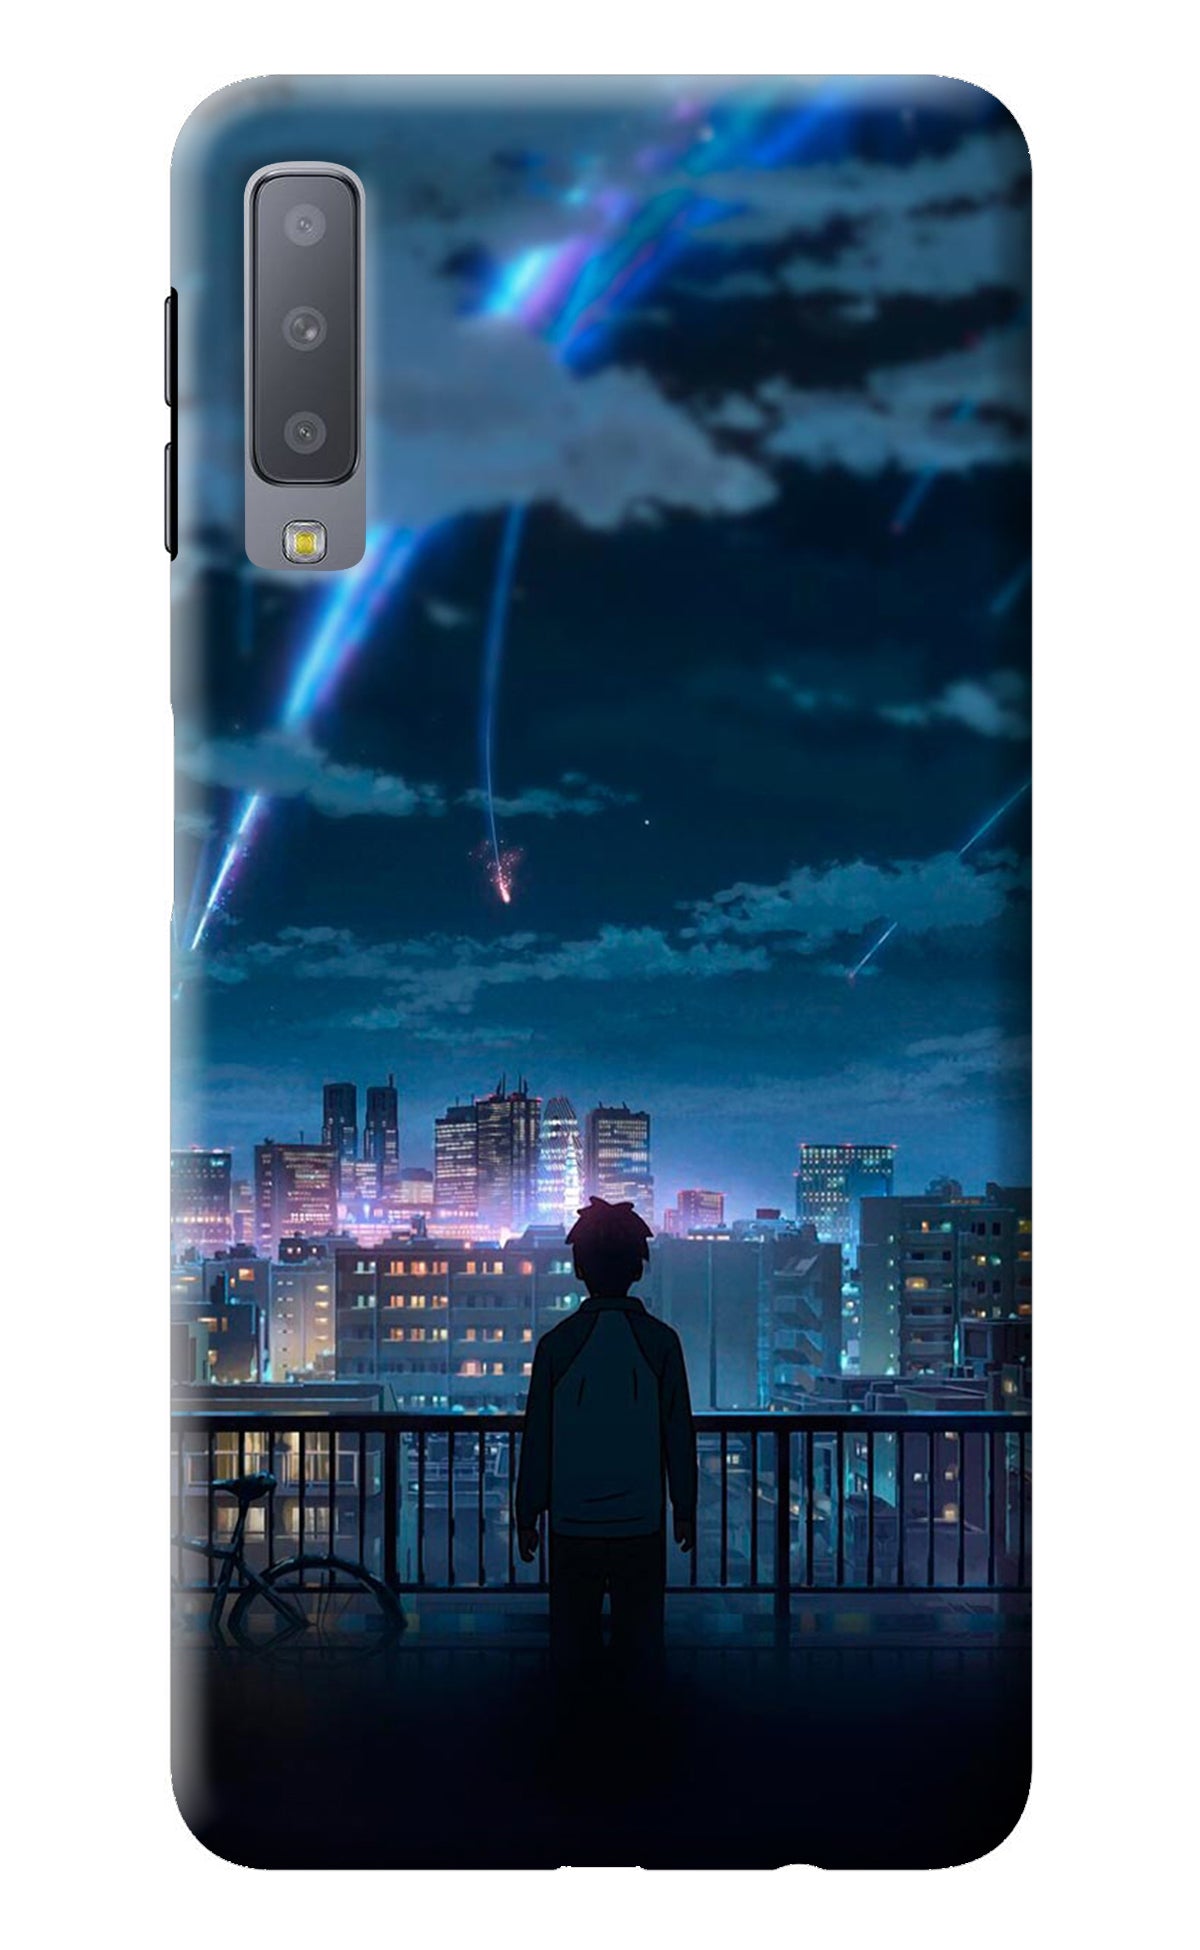 Anime Samsung A7 Back Cover